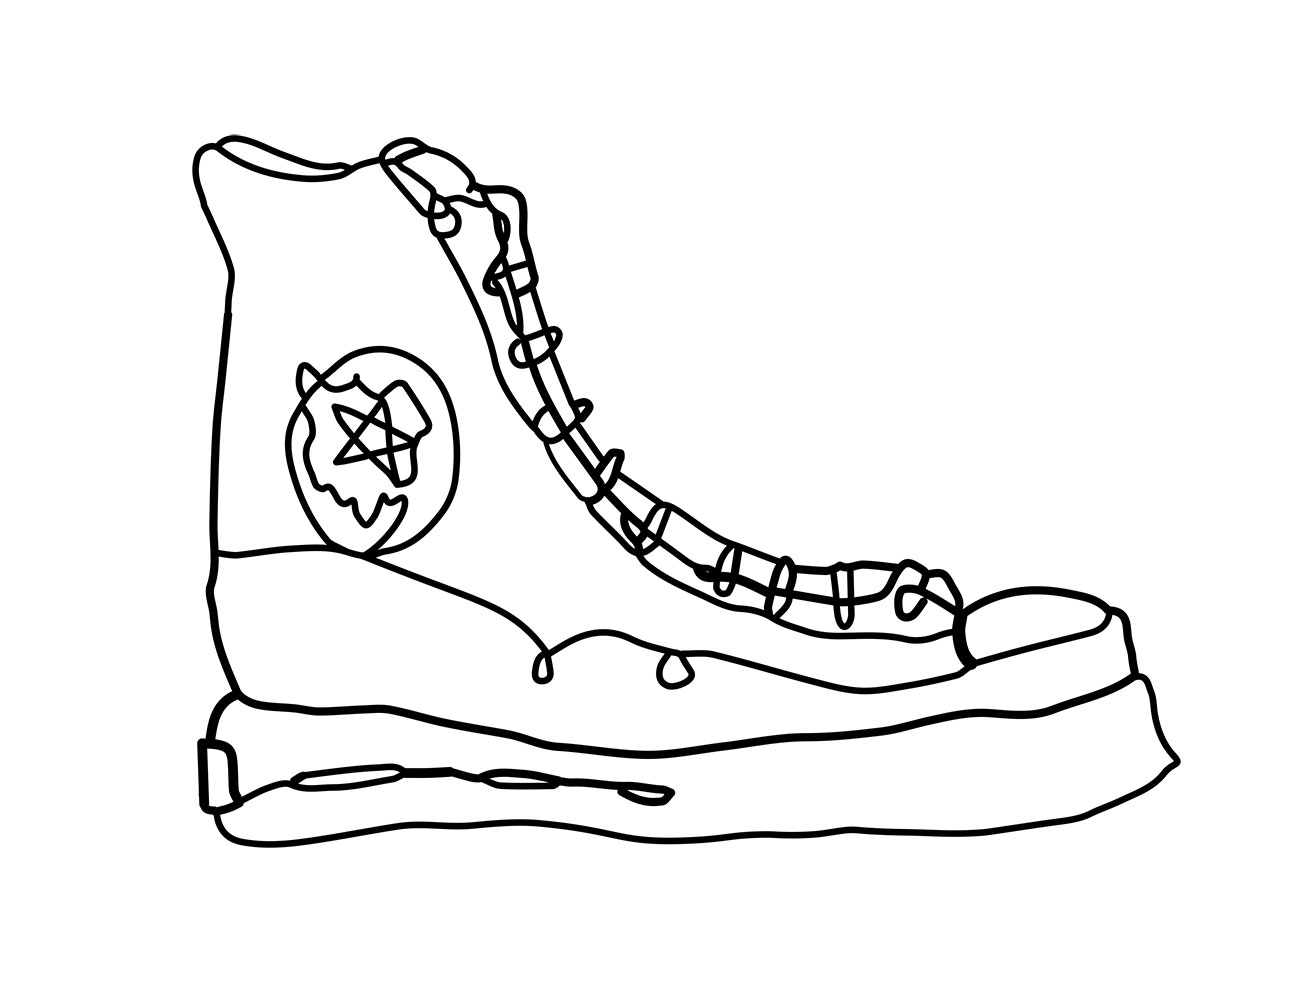 Shoe drawing three: contour drawing.